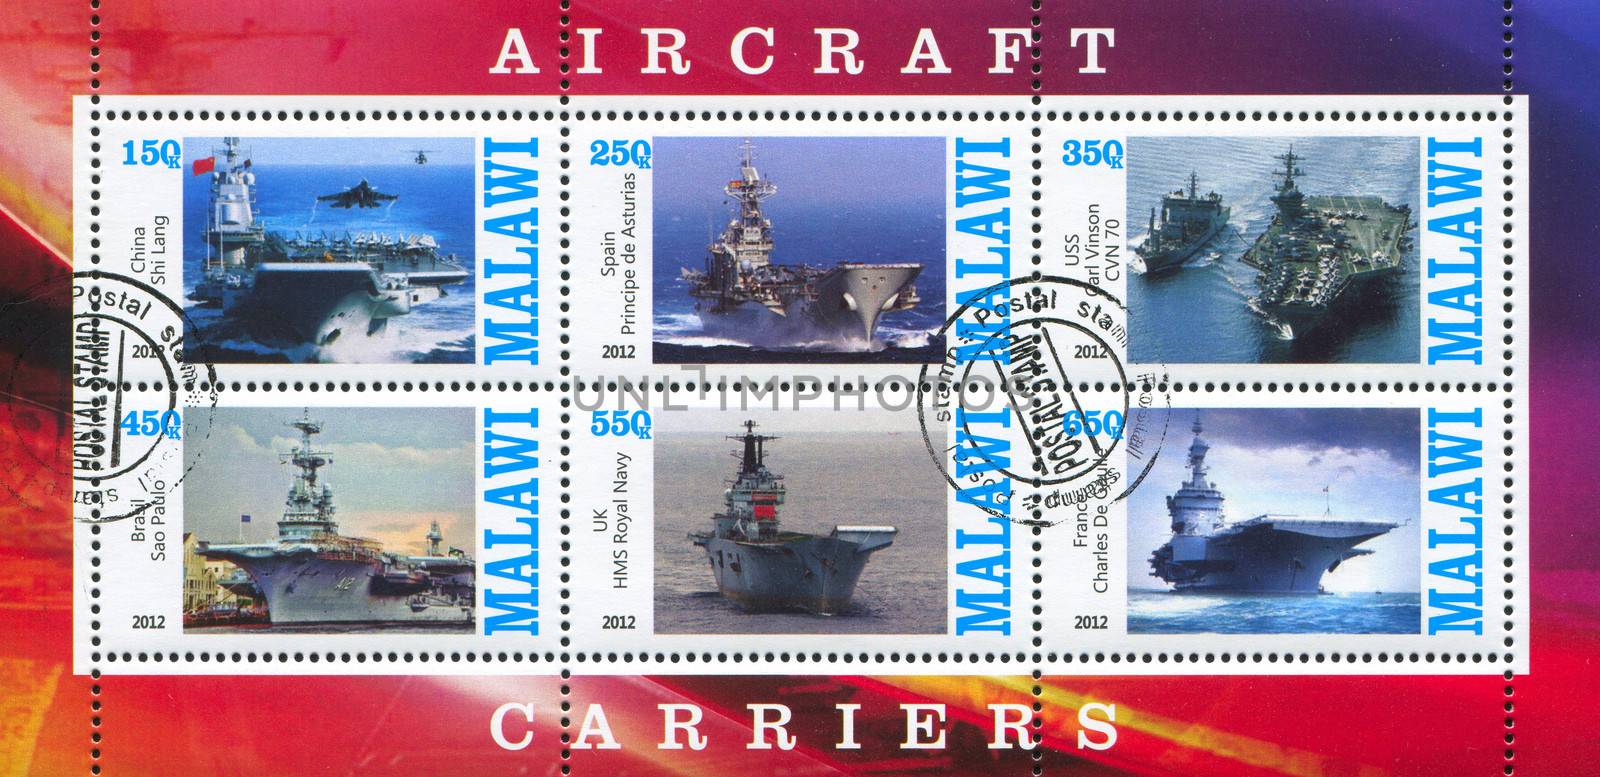 MALAWI - CIRCA 2012: stamp printed by Malawi, shows aircraft carrier, circa 2012